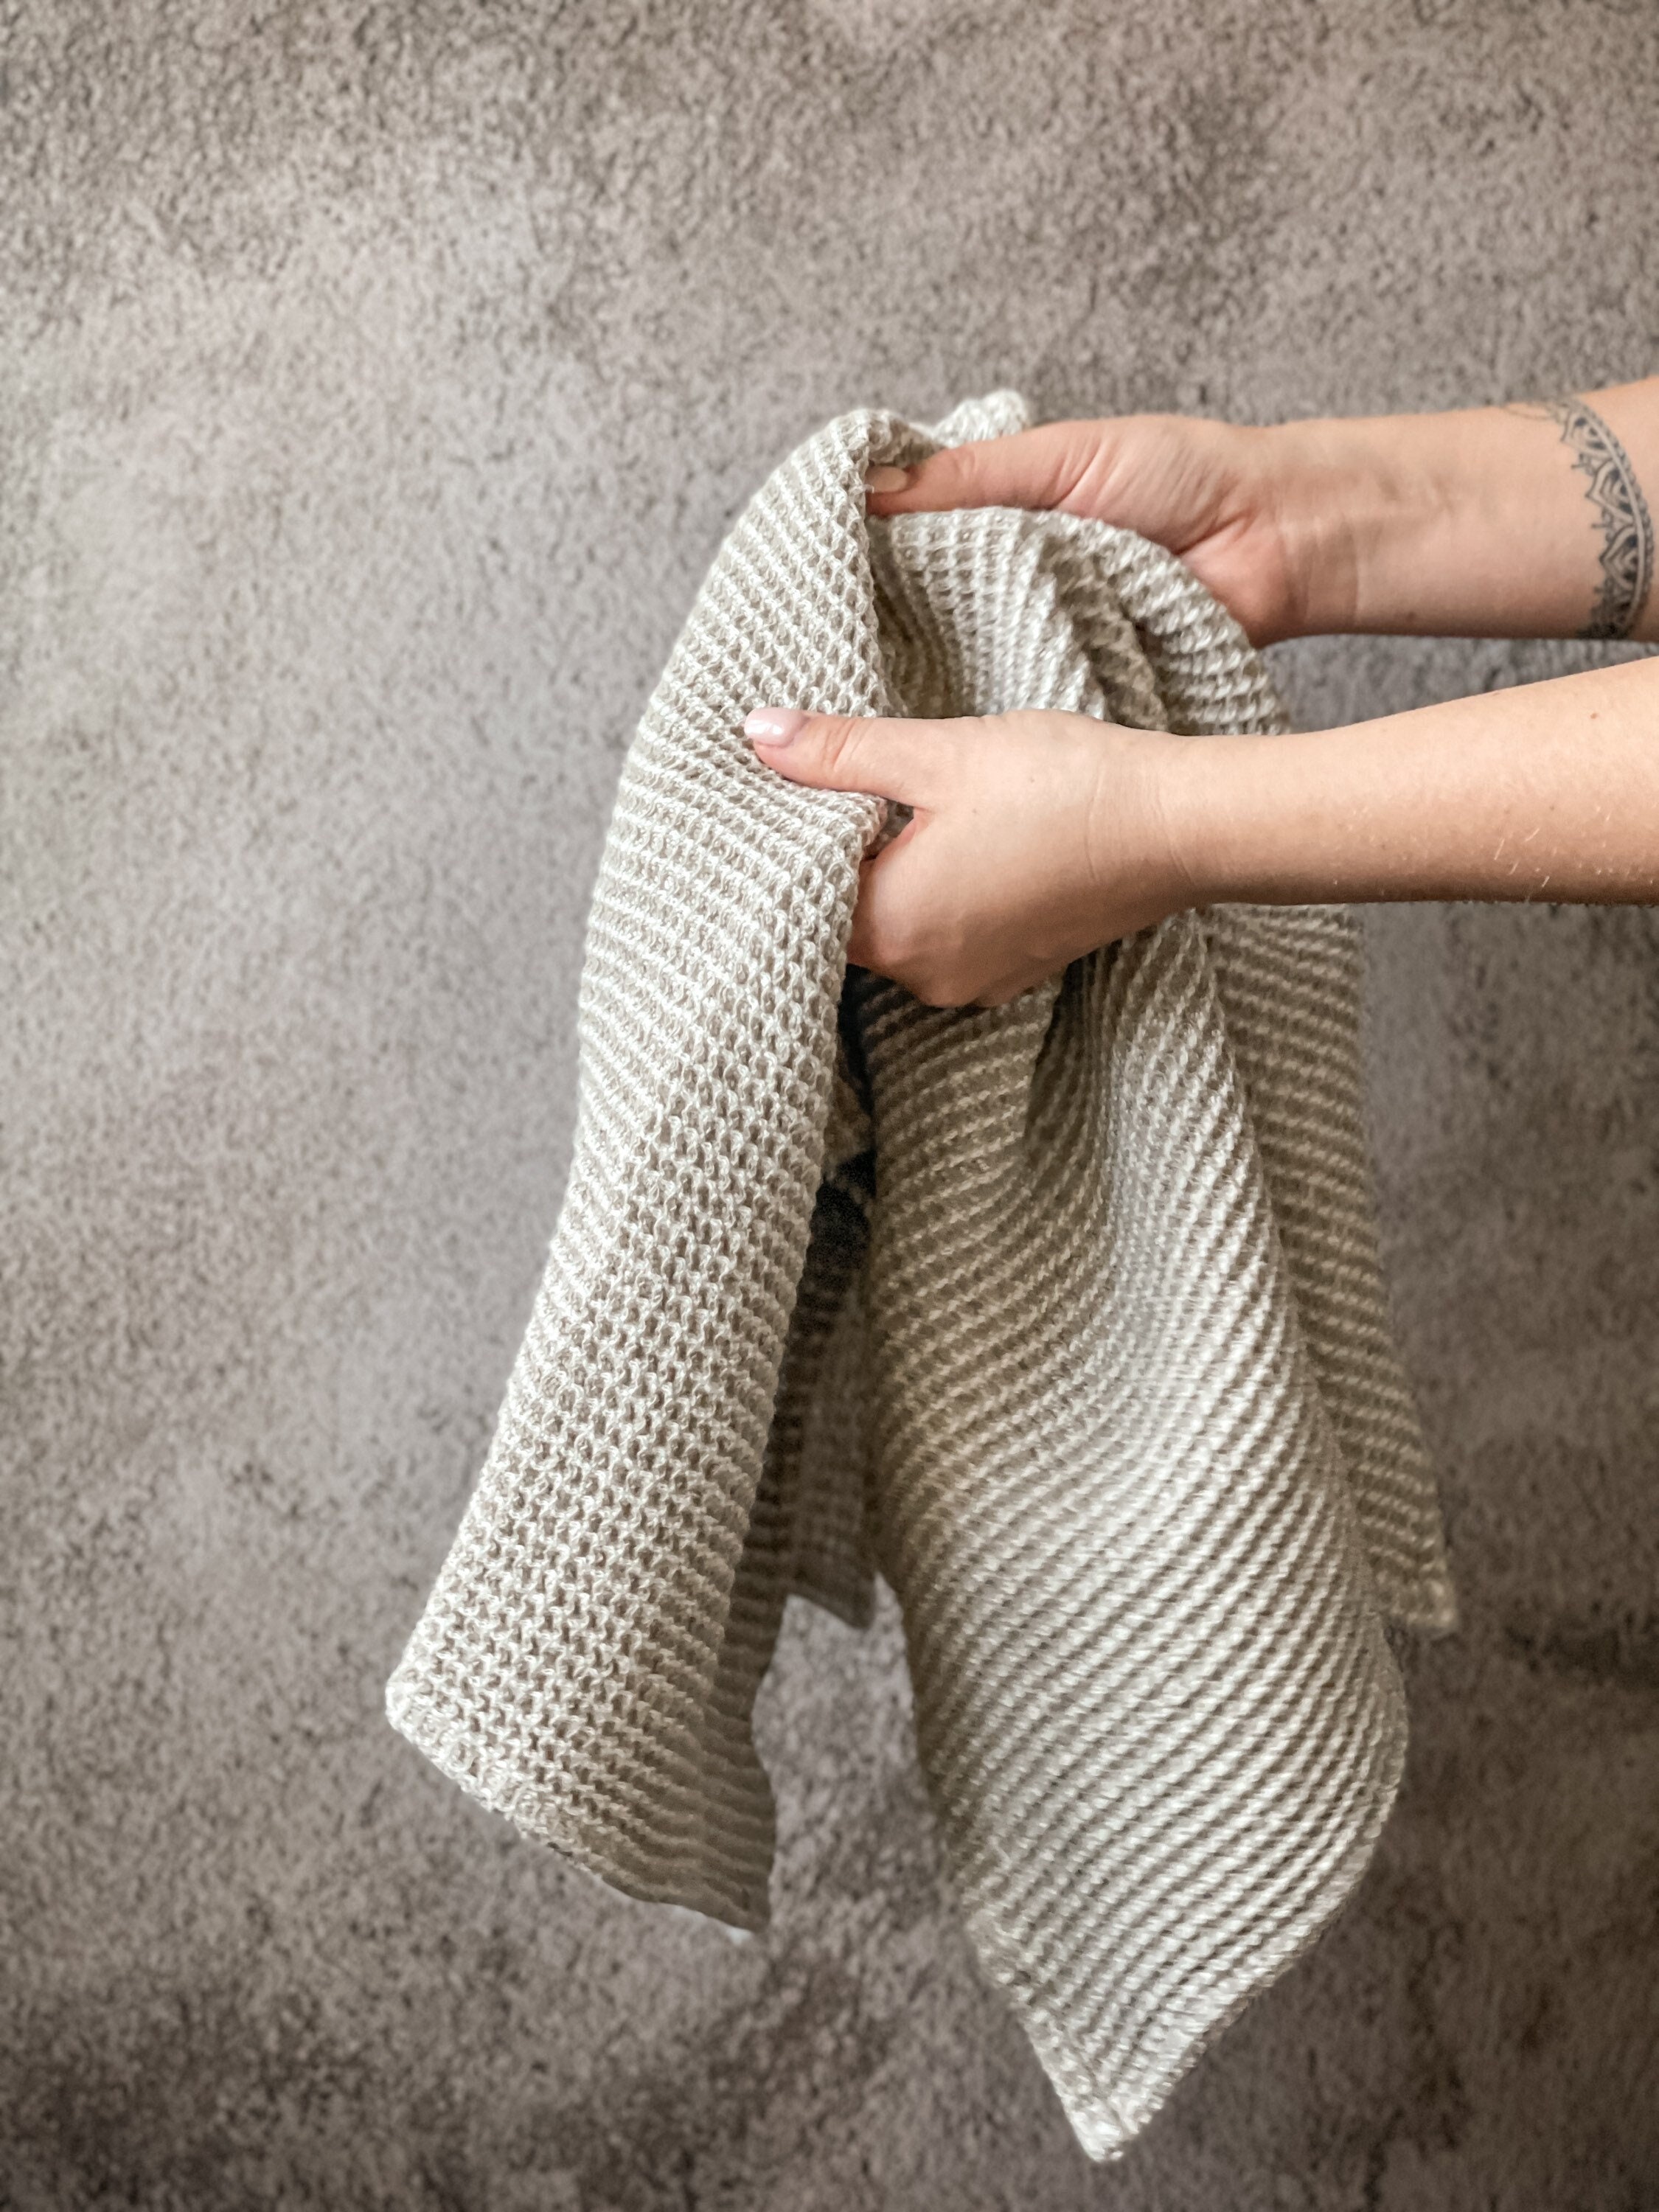 Natural Linen Bath Towels Rustic Waffle Body Towels Thick Massage